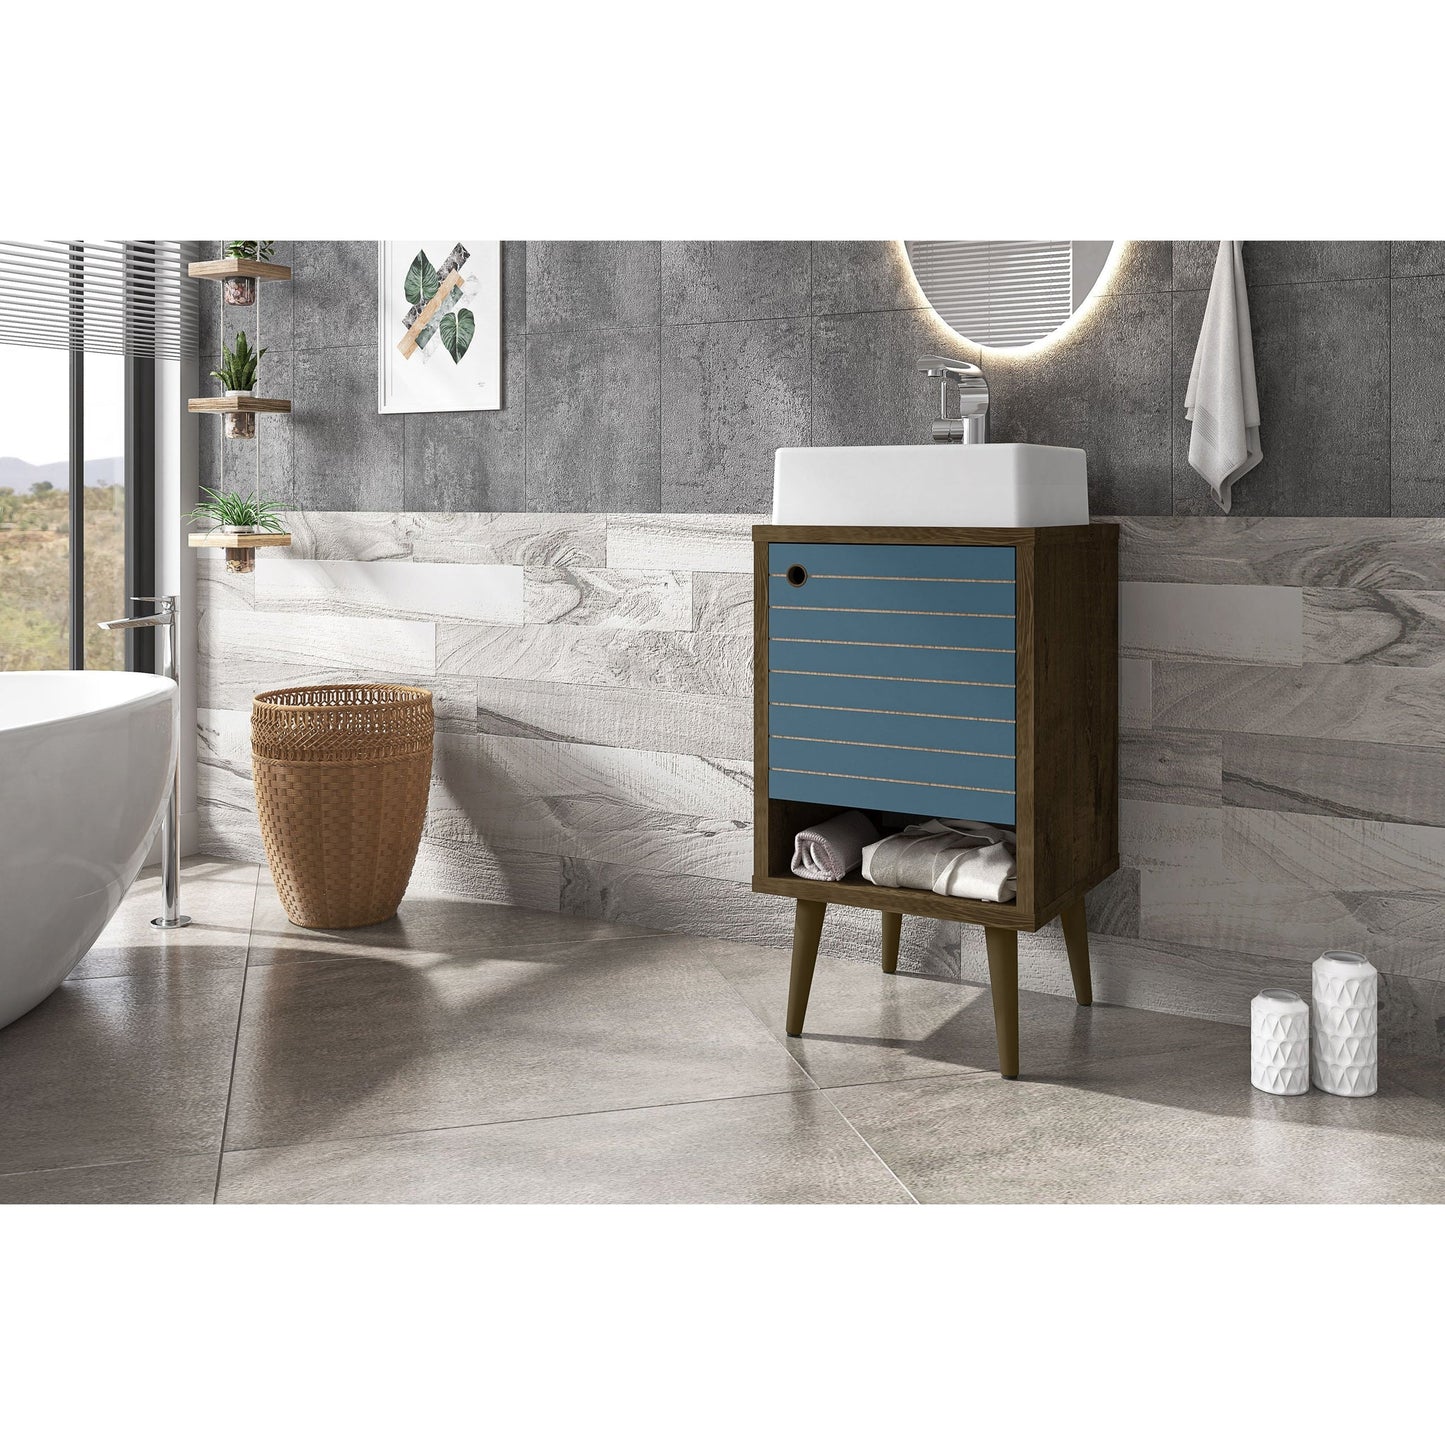 Manhattan Comfort Liberty 17.71" Rustic Brown And Aqua Blue Bathroom Vanity With Sink And Shelf